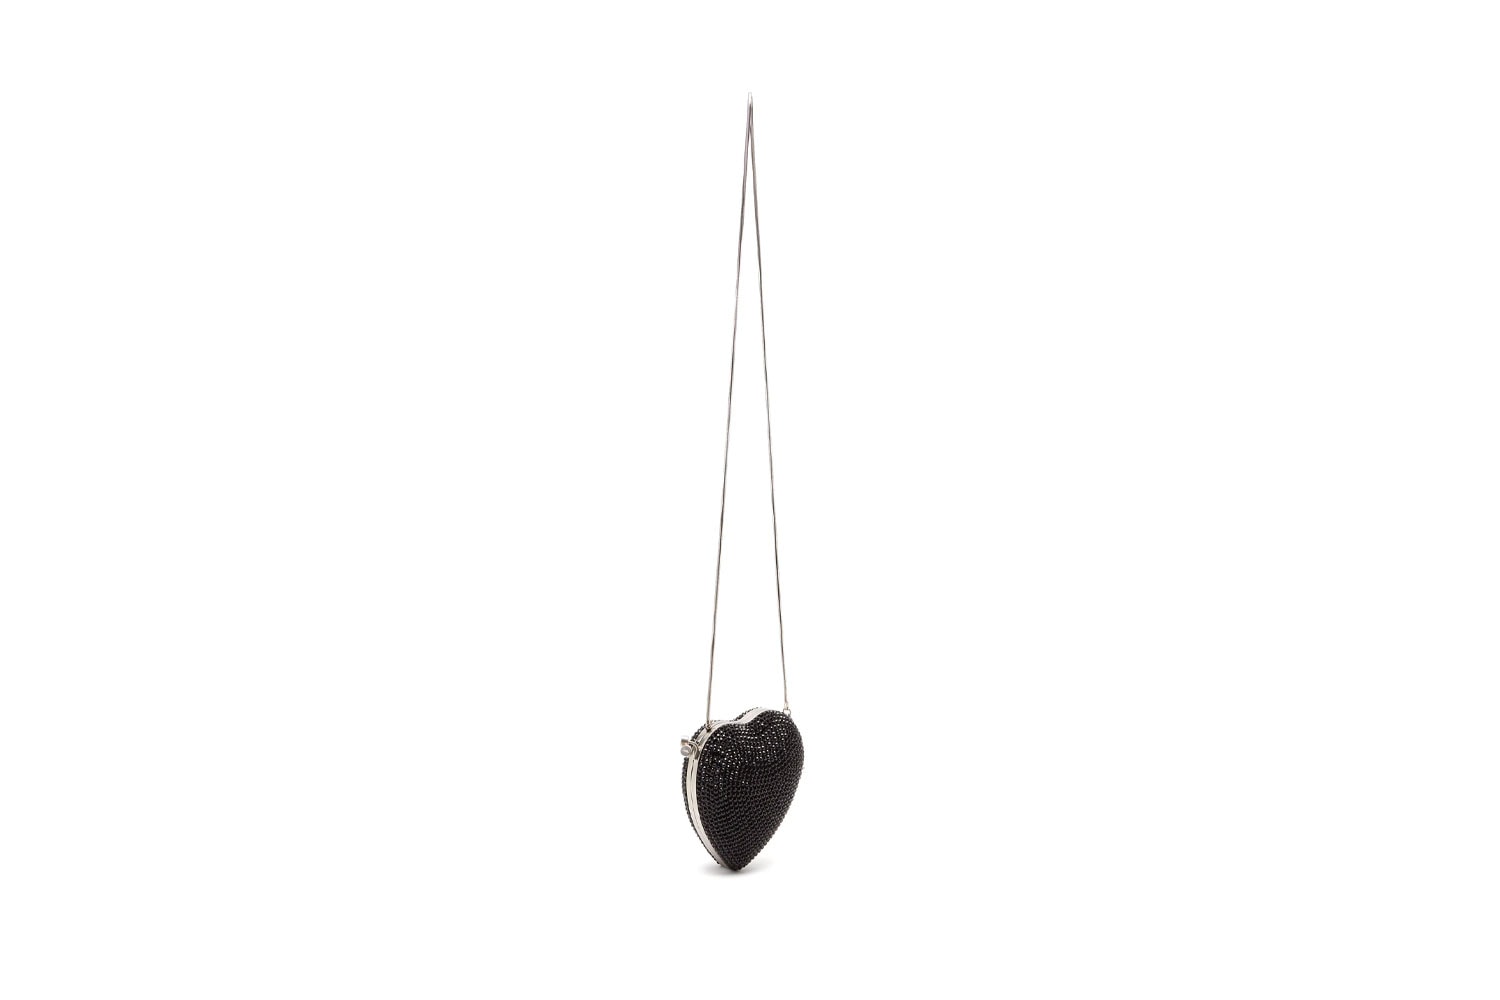 saint laurent love box clutch heart-shaped black crystals bags